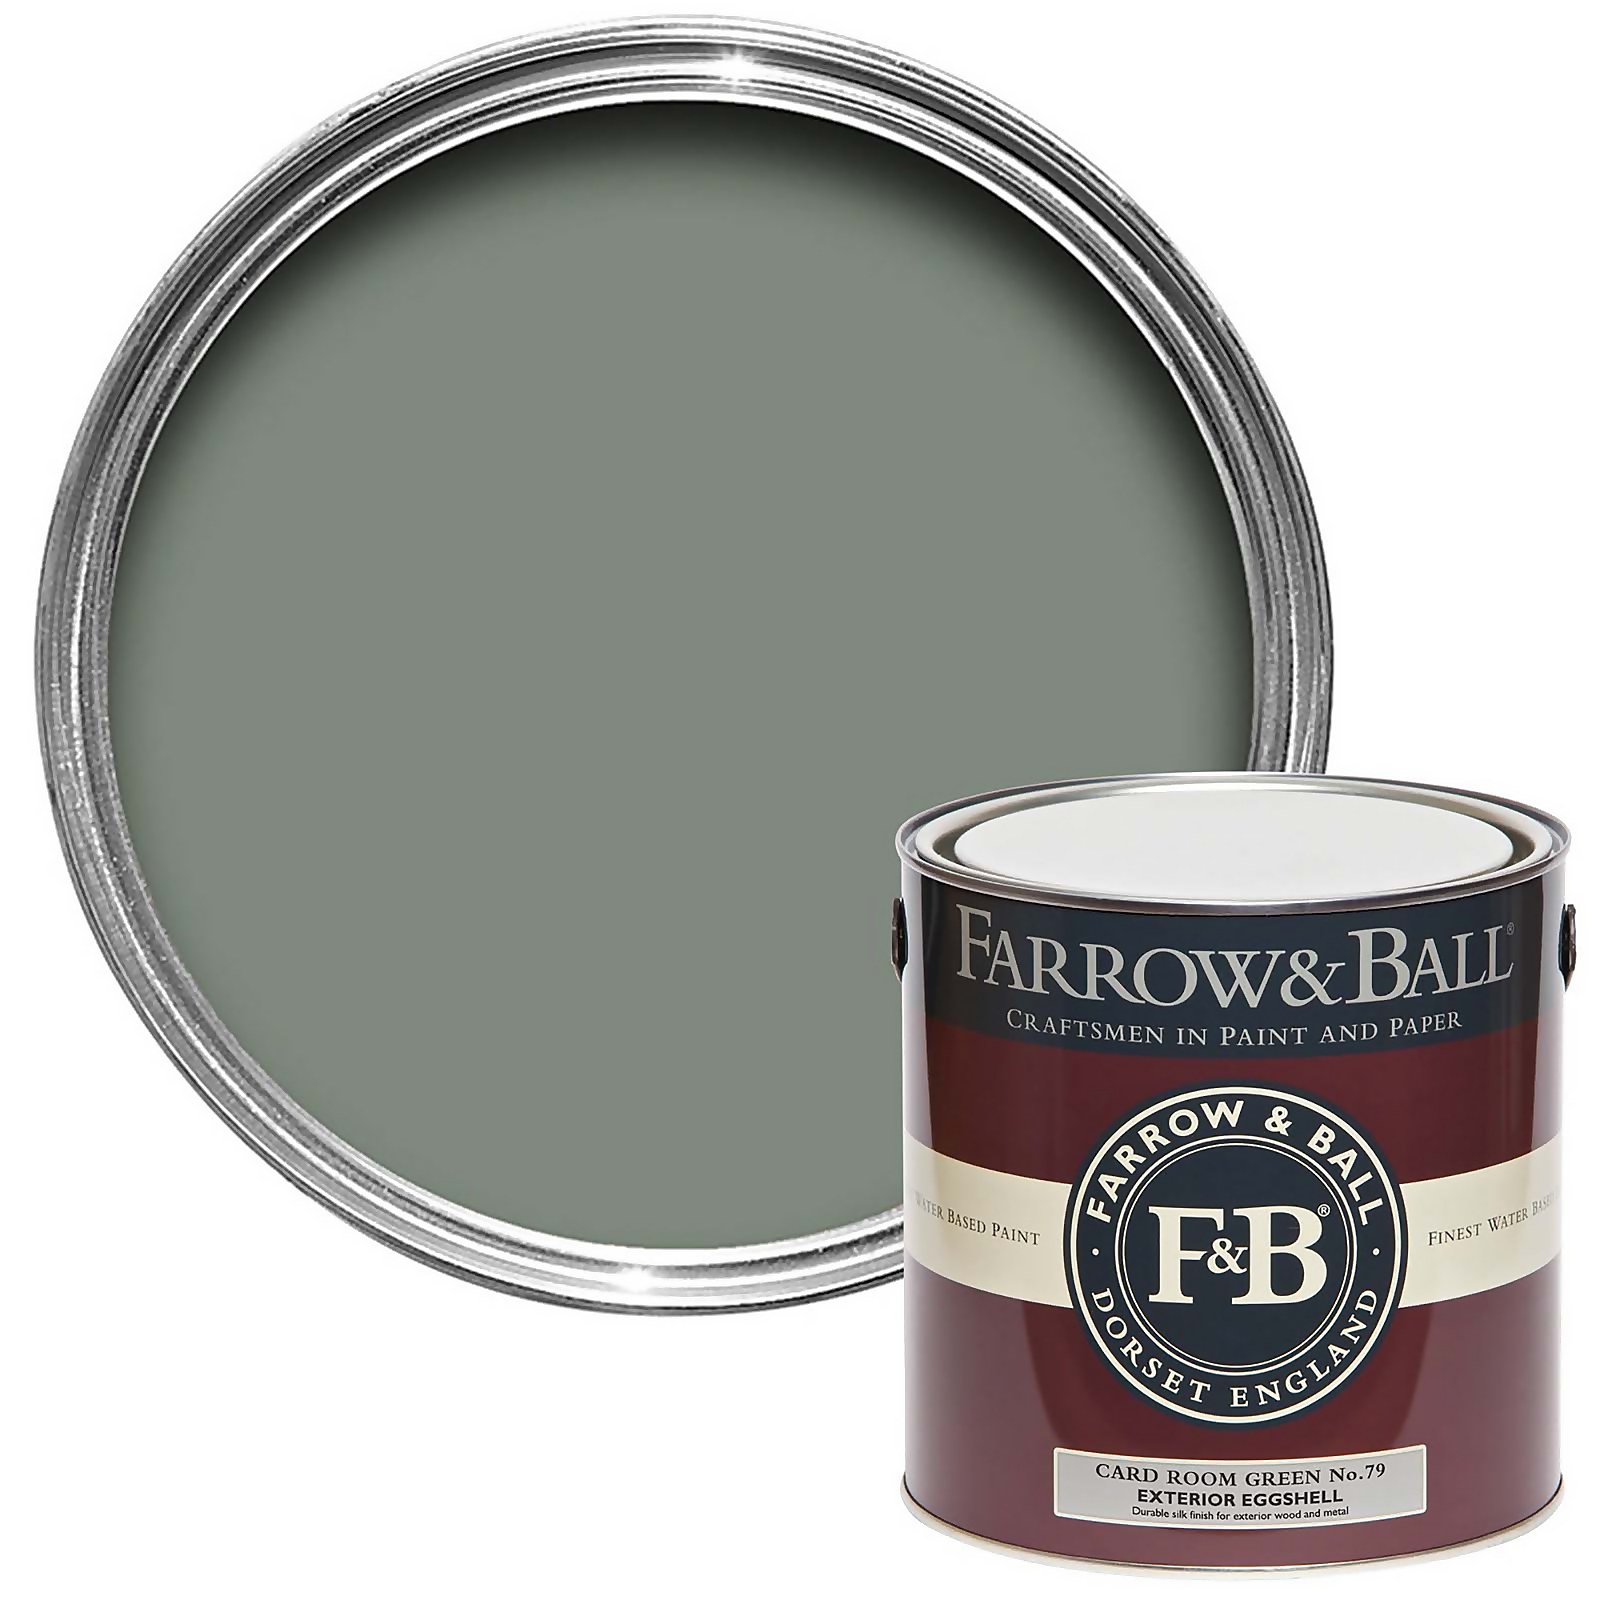 Farrow & Ball Exterior Eggshell Paint Card Room Green No.79 - 2.5L